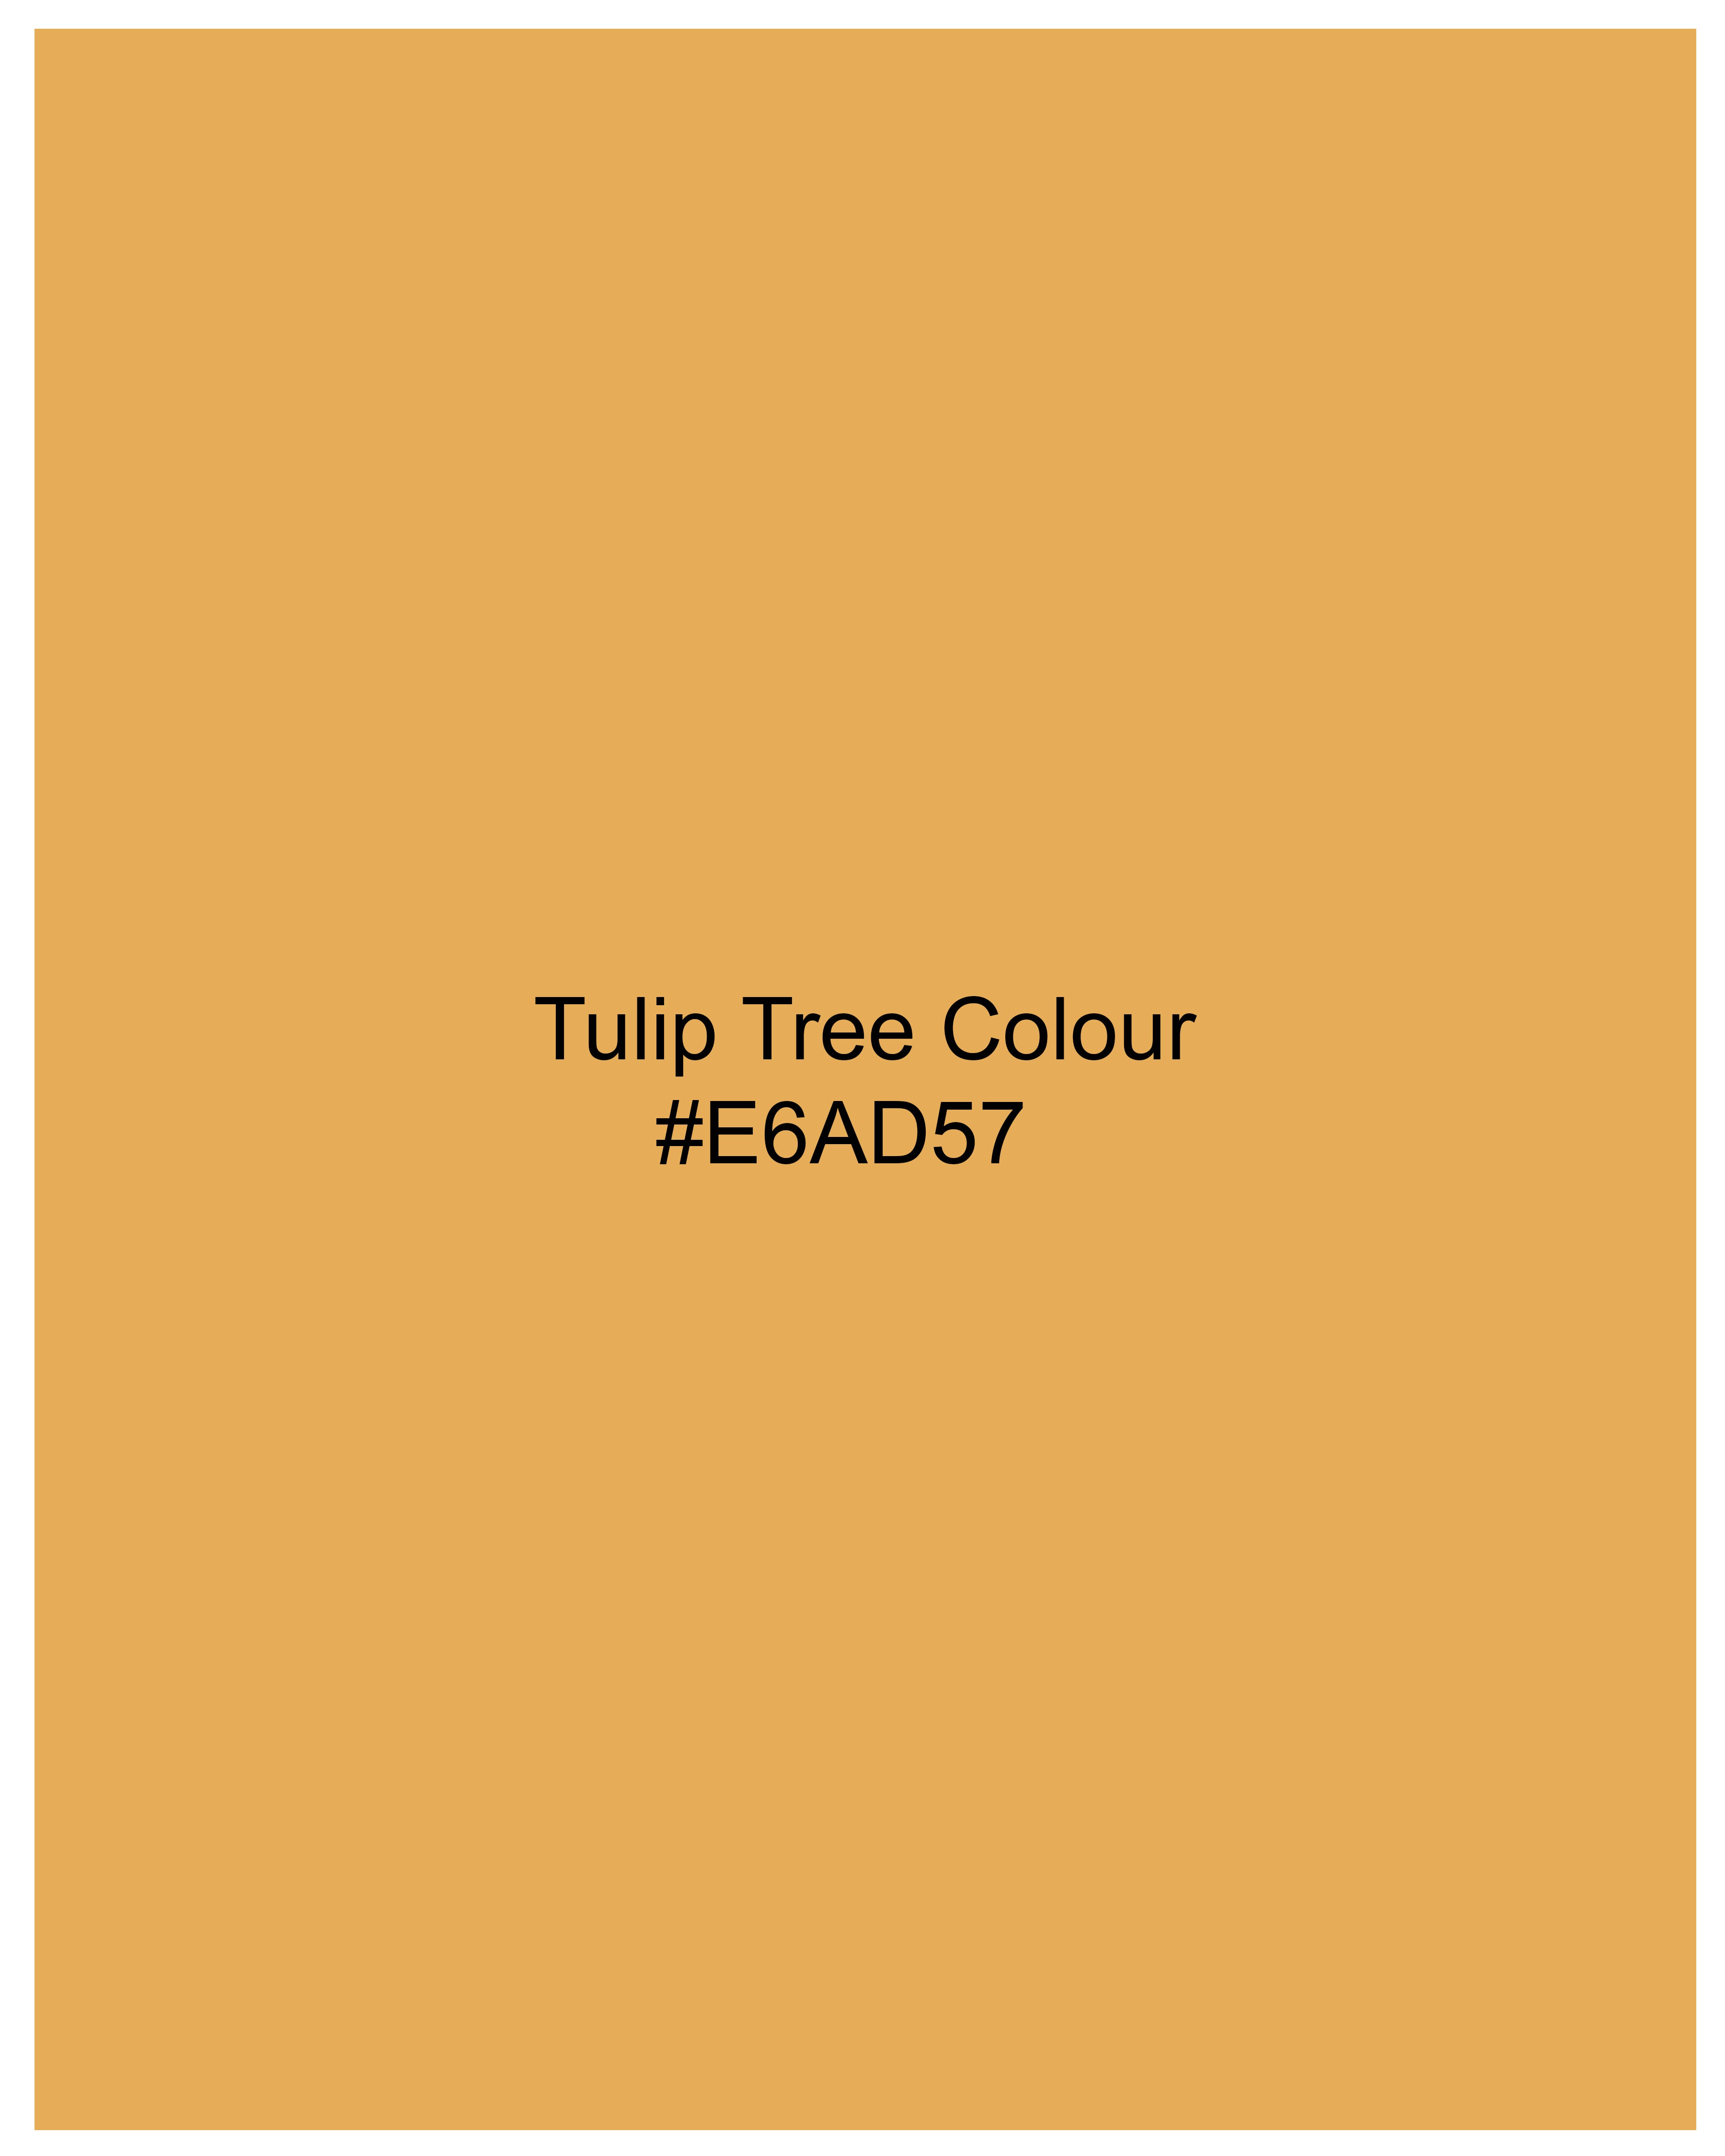 Tulip Tree Orange Textured Luxurious Linen Shirt 9375-M-CB-38, 9375-M-CB-H-38, 9375-M-CB-39, 9375-M-CB-H-39, 9375-M-CB-40, 9375-M-CB-H-40, 9375-M-CB-42, 9375-M-CB-H-42, 9375-M-CB-44, 9375-M-CB-H-44, 9375-M-CB-46, 9375-M-CB-H-46, 9375-M-CB-48, 9375-M-CB-H-48, 9375-M-CB-50, 9375-M-CB-H-50, 9375-M-CB-52, 9375-M-CB-H-52